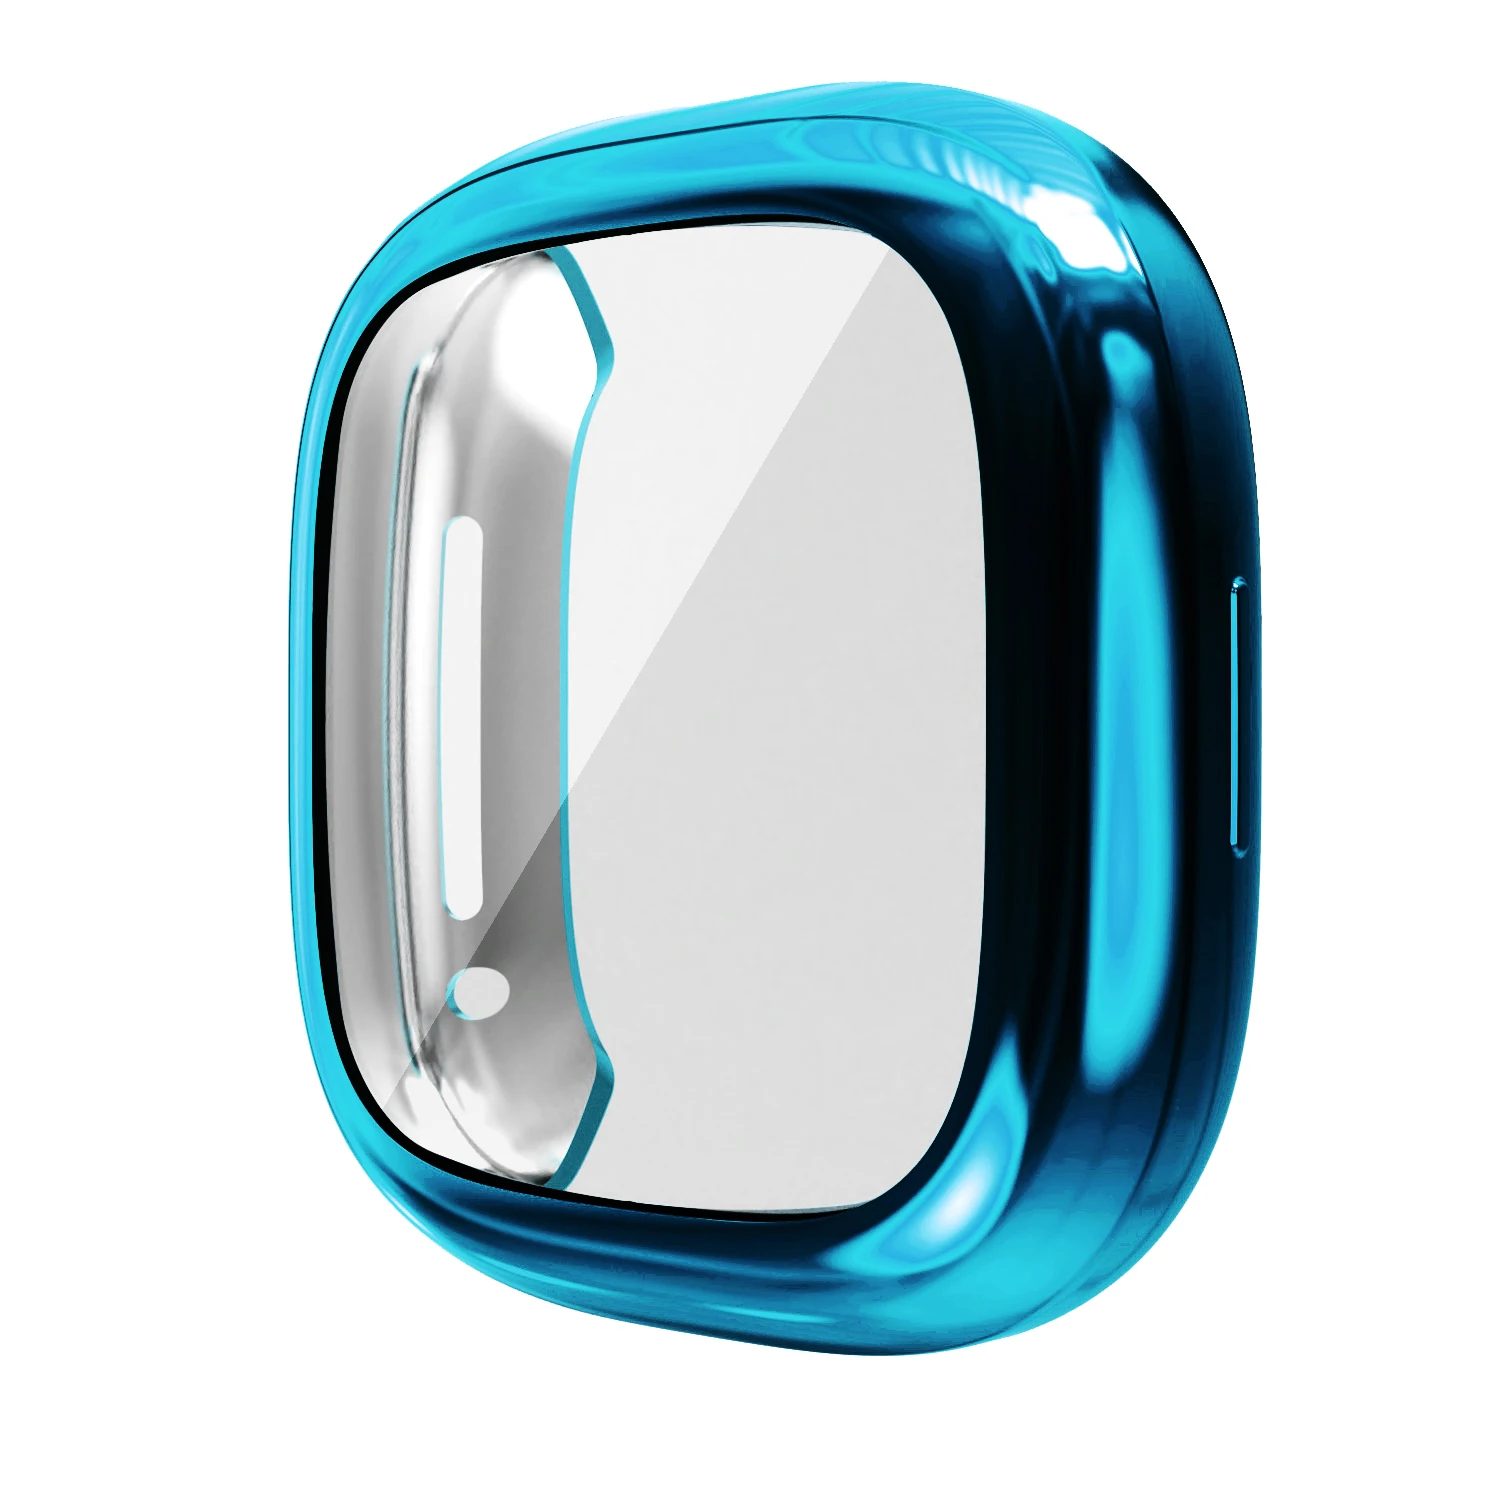 

2020 Hot Sales Soft Tpu Case For Fitbit Versa 2 Versa 3 Versa lite Sense Band Waterproof Watch Shell Cover Screen Protector, Black,white,blue,red,pink